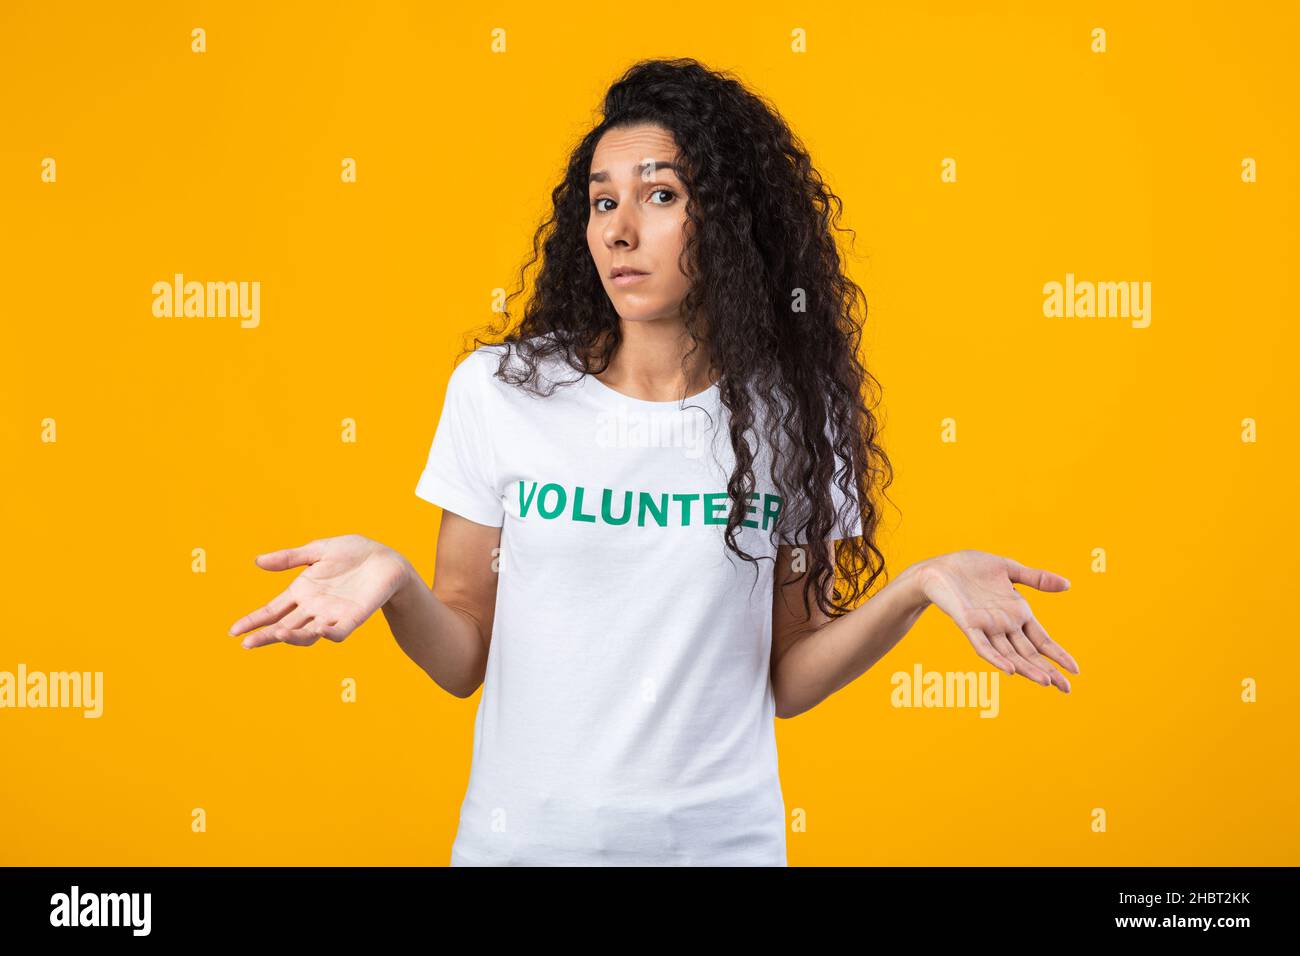 Puzzled Female Volunteer Shrugging Shoulders Posing On Yellow Background Stock Photo